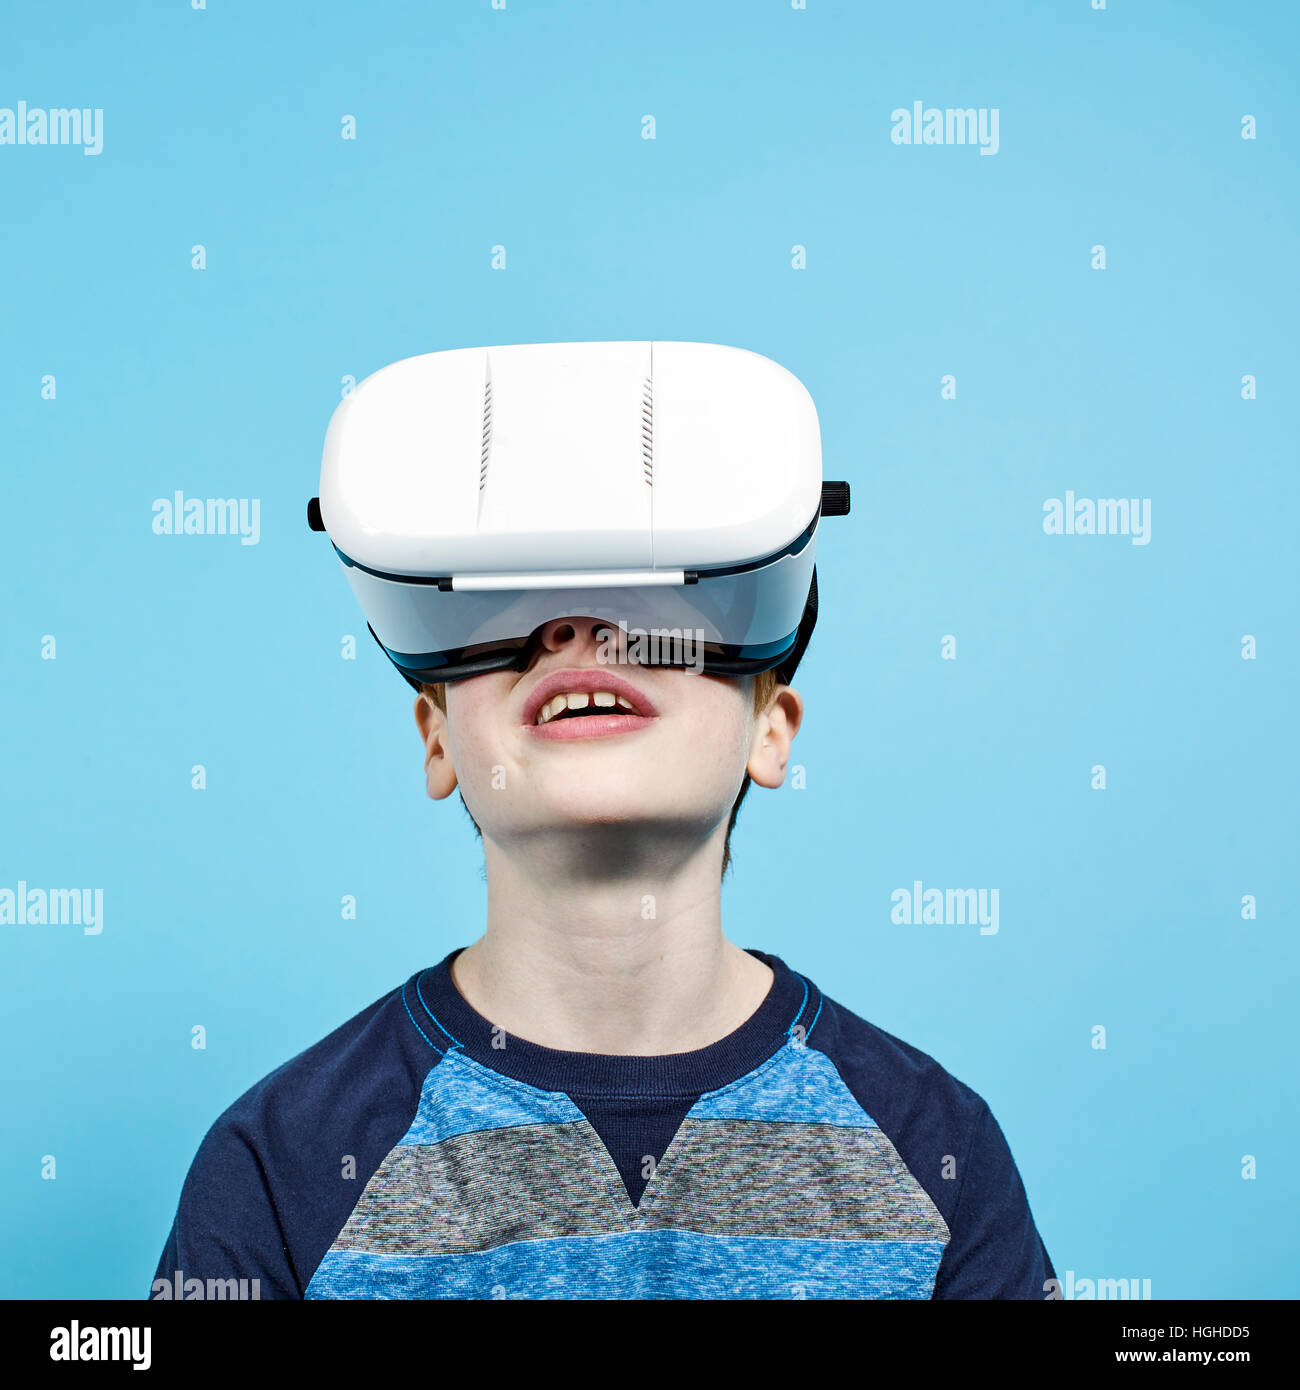 boy 10yo wearing VR headset, VR Glasses Stock Photo